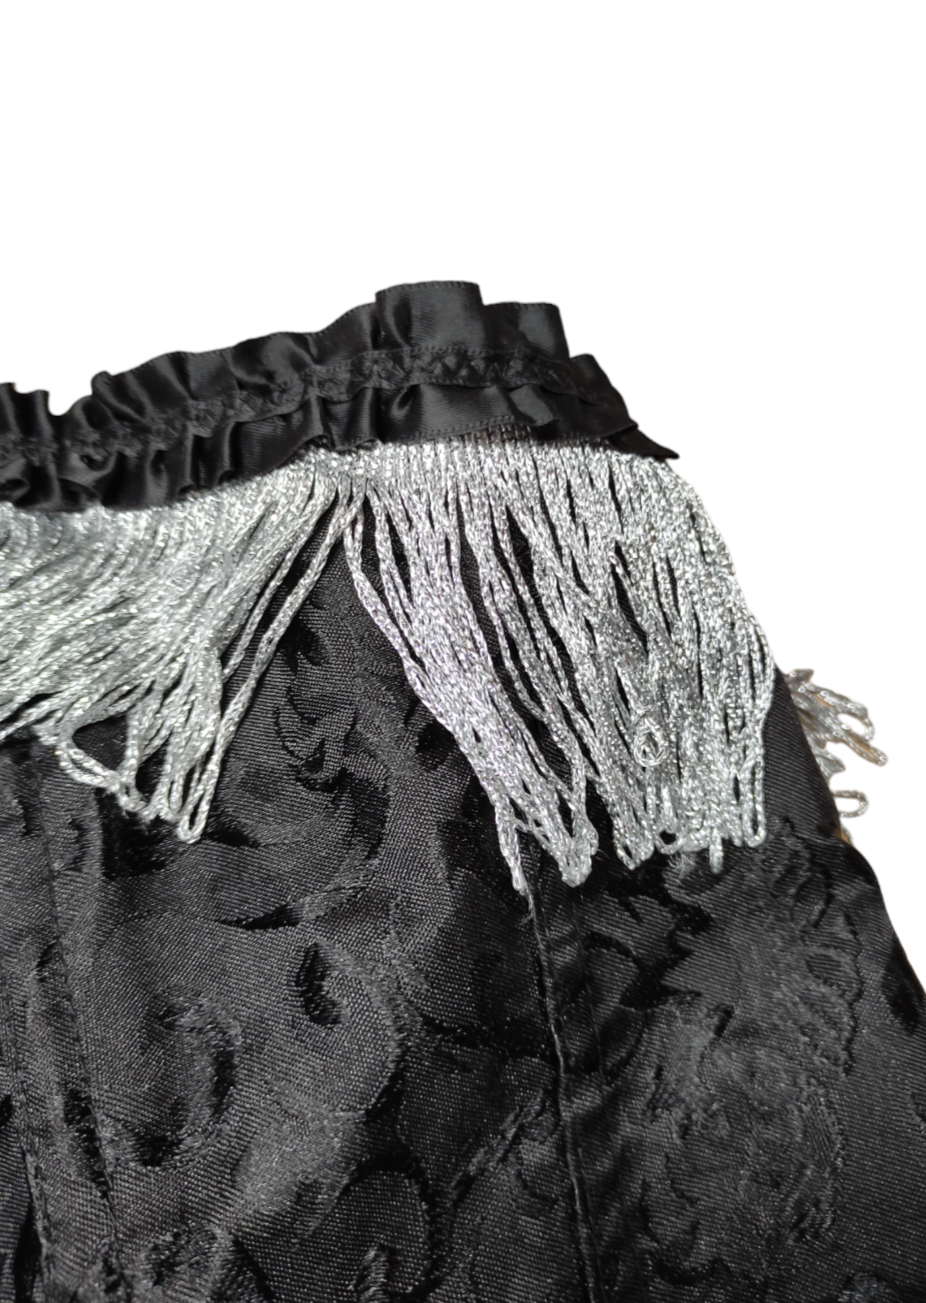 Vintage Style Κορσές με Σατινέ, ανάγλυφη υφή σε Μαύρο χρώμα (καλύπτει από M-2XL)